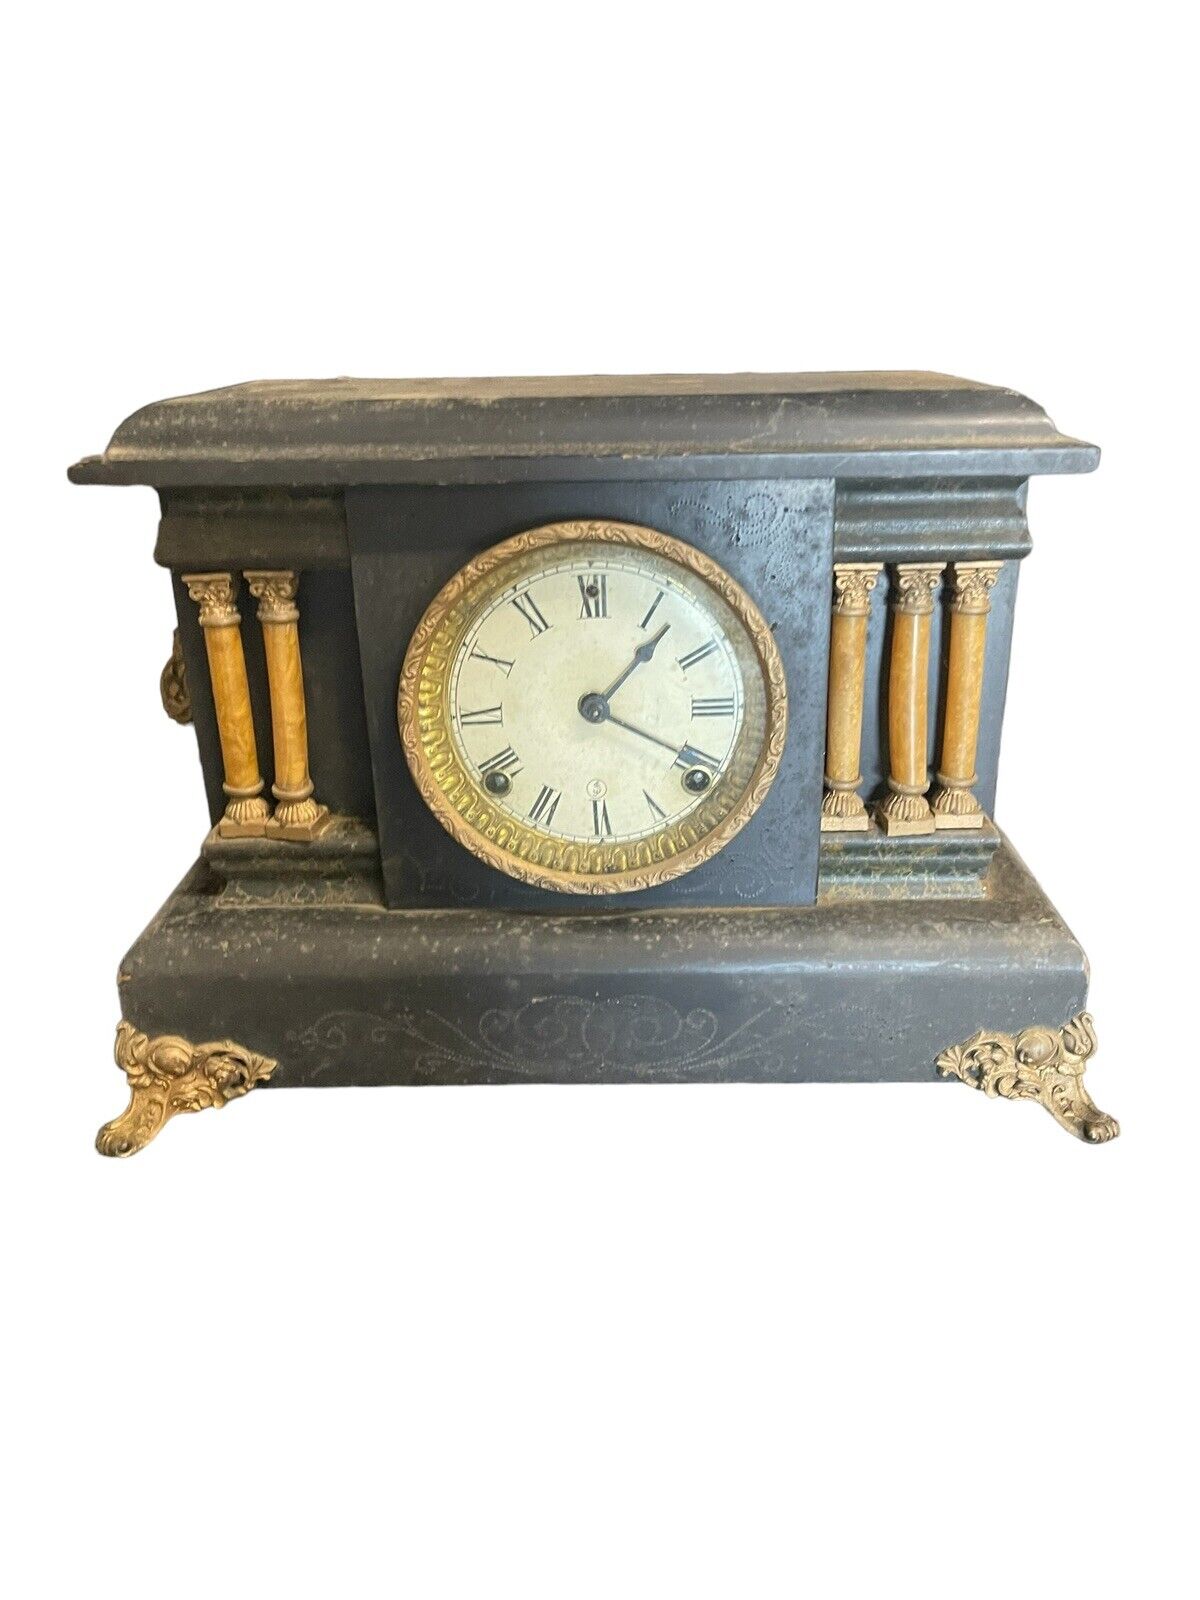 Antique Mantel Clock With Key